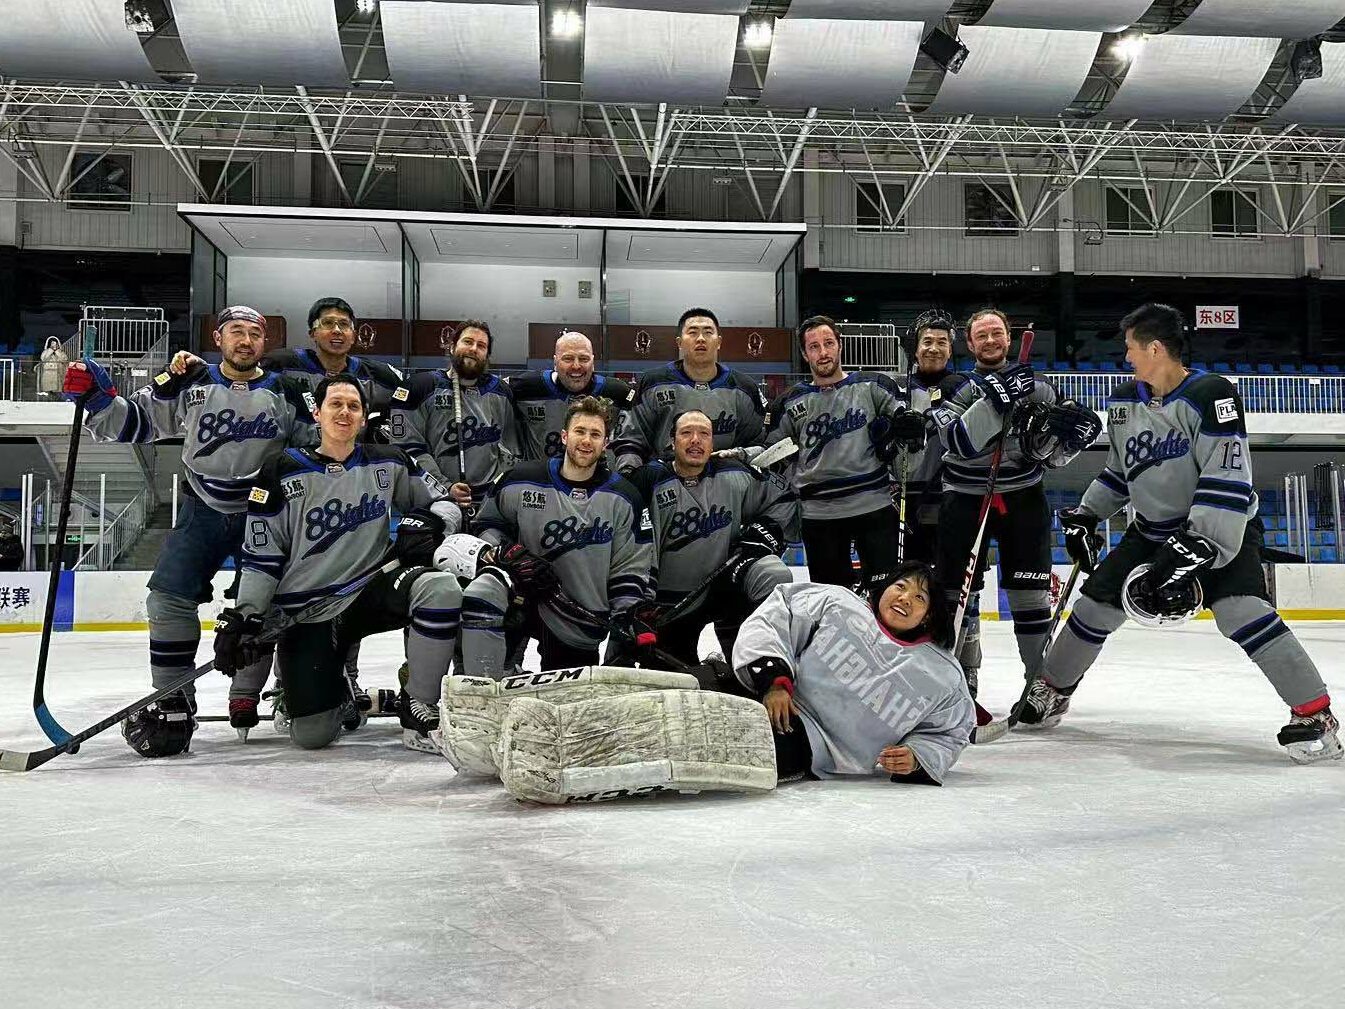 Beijing Hockey League, Playing Hockey in China, Sports in China, Expats in China, Living in China